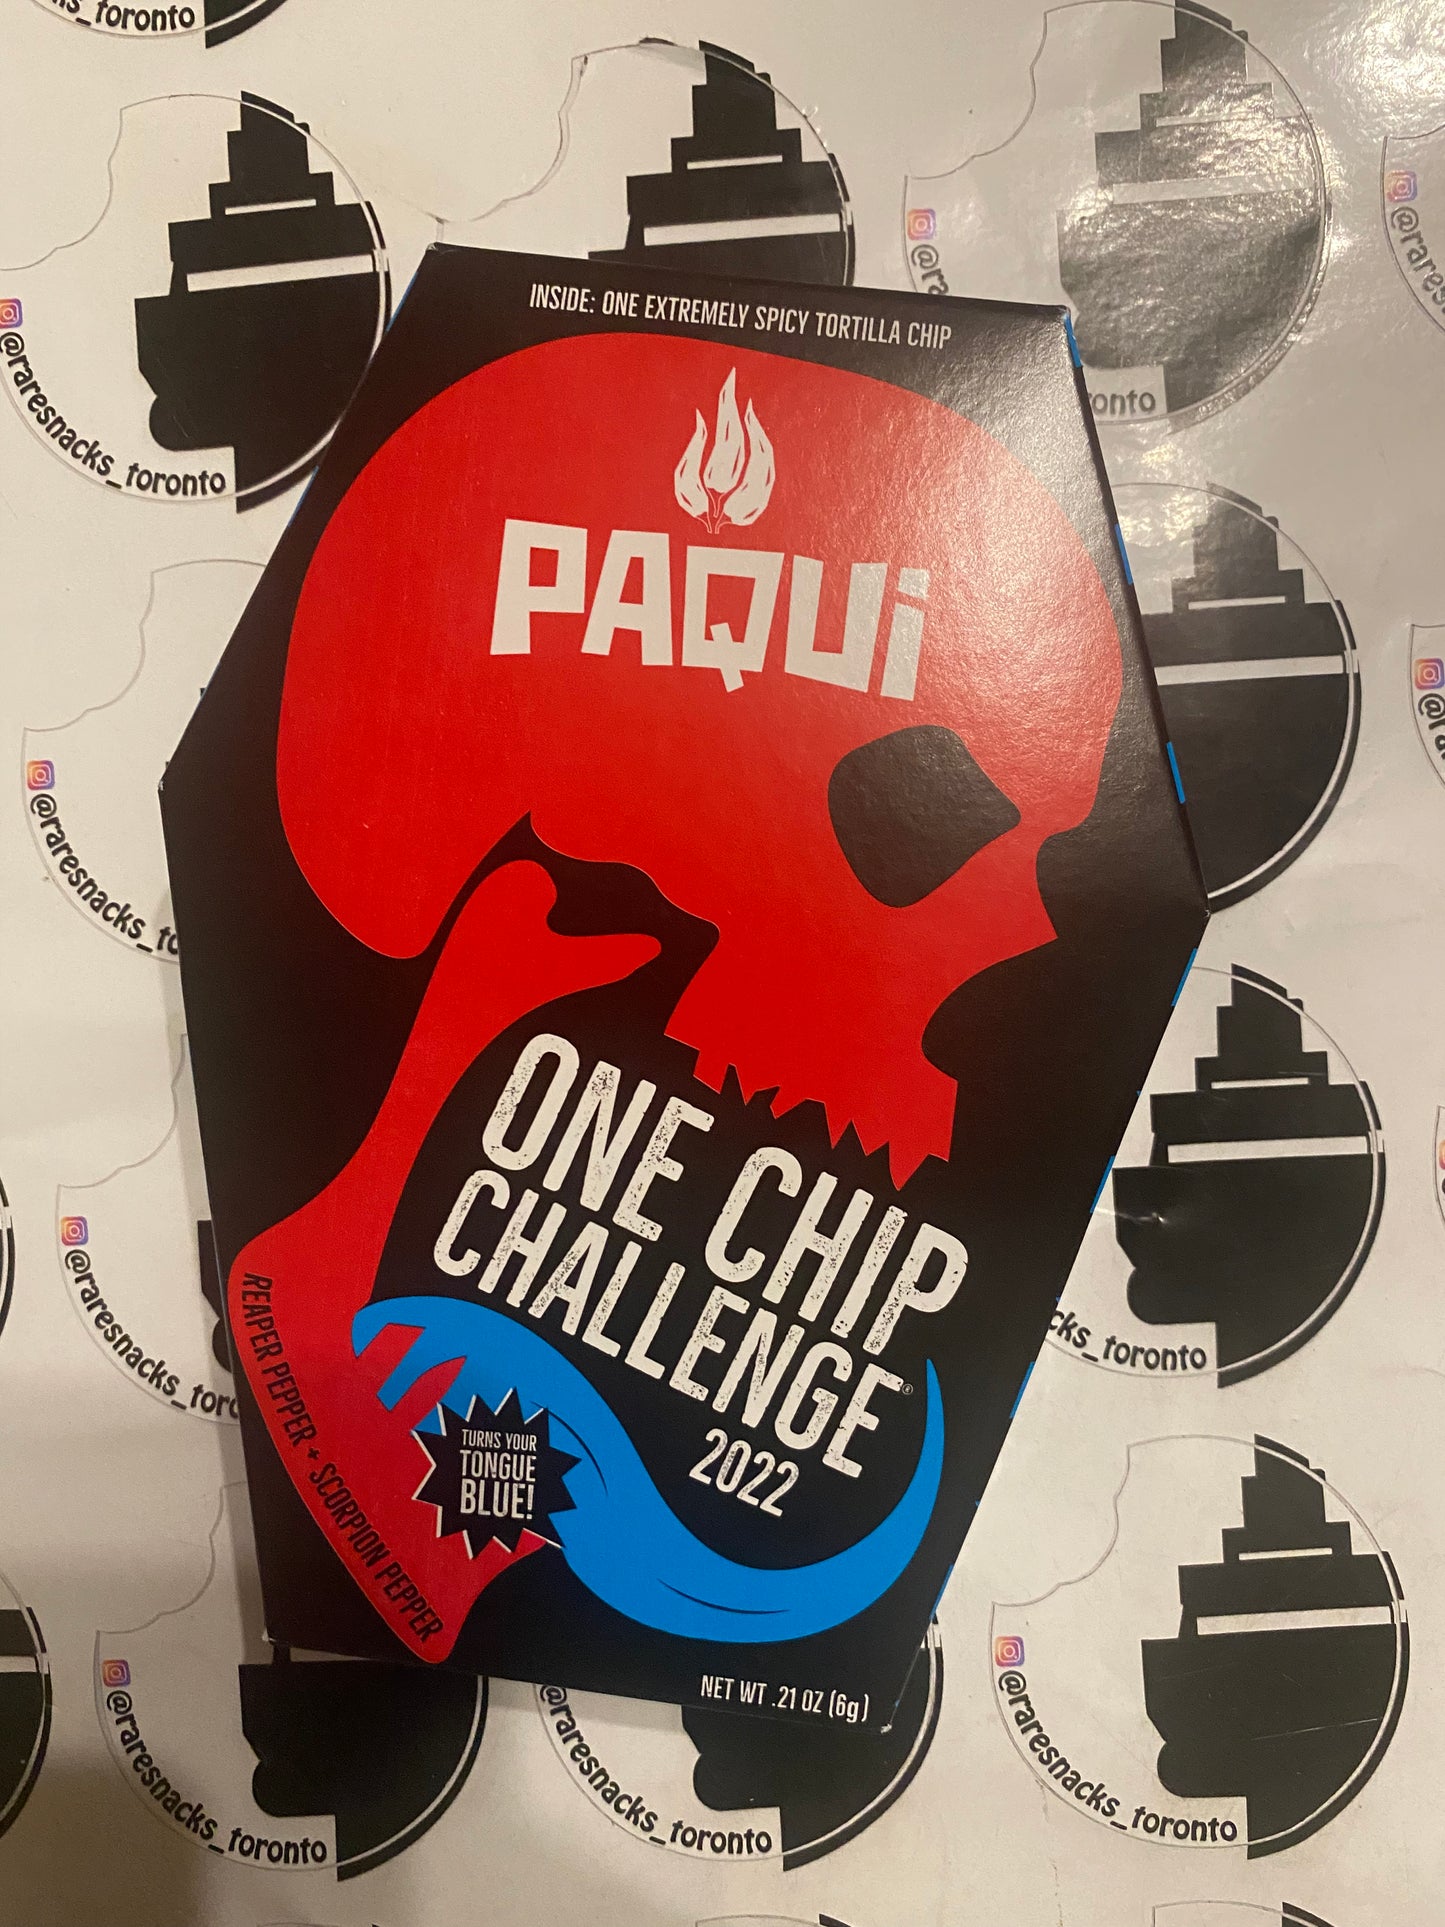 Paqui One Chip Challenge 2022